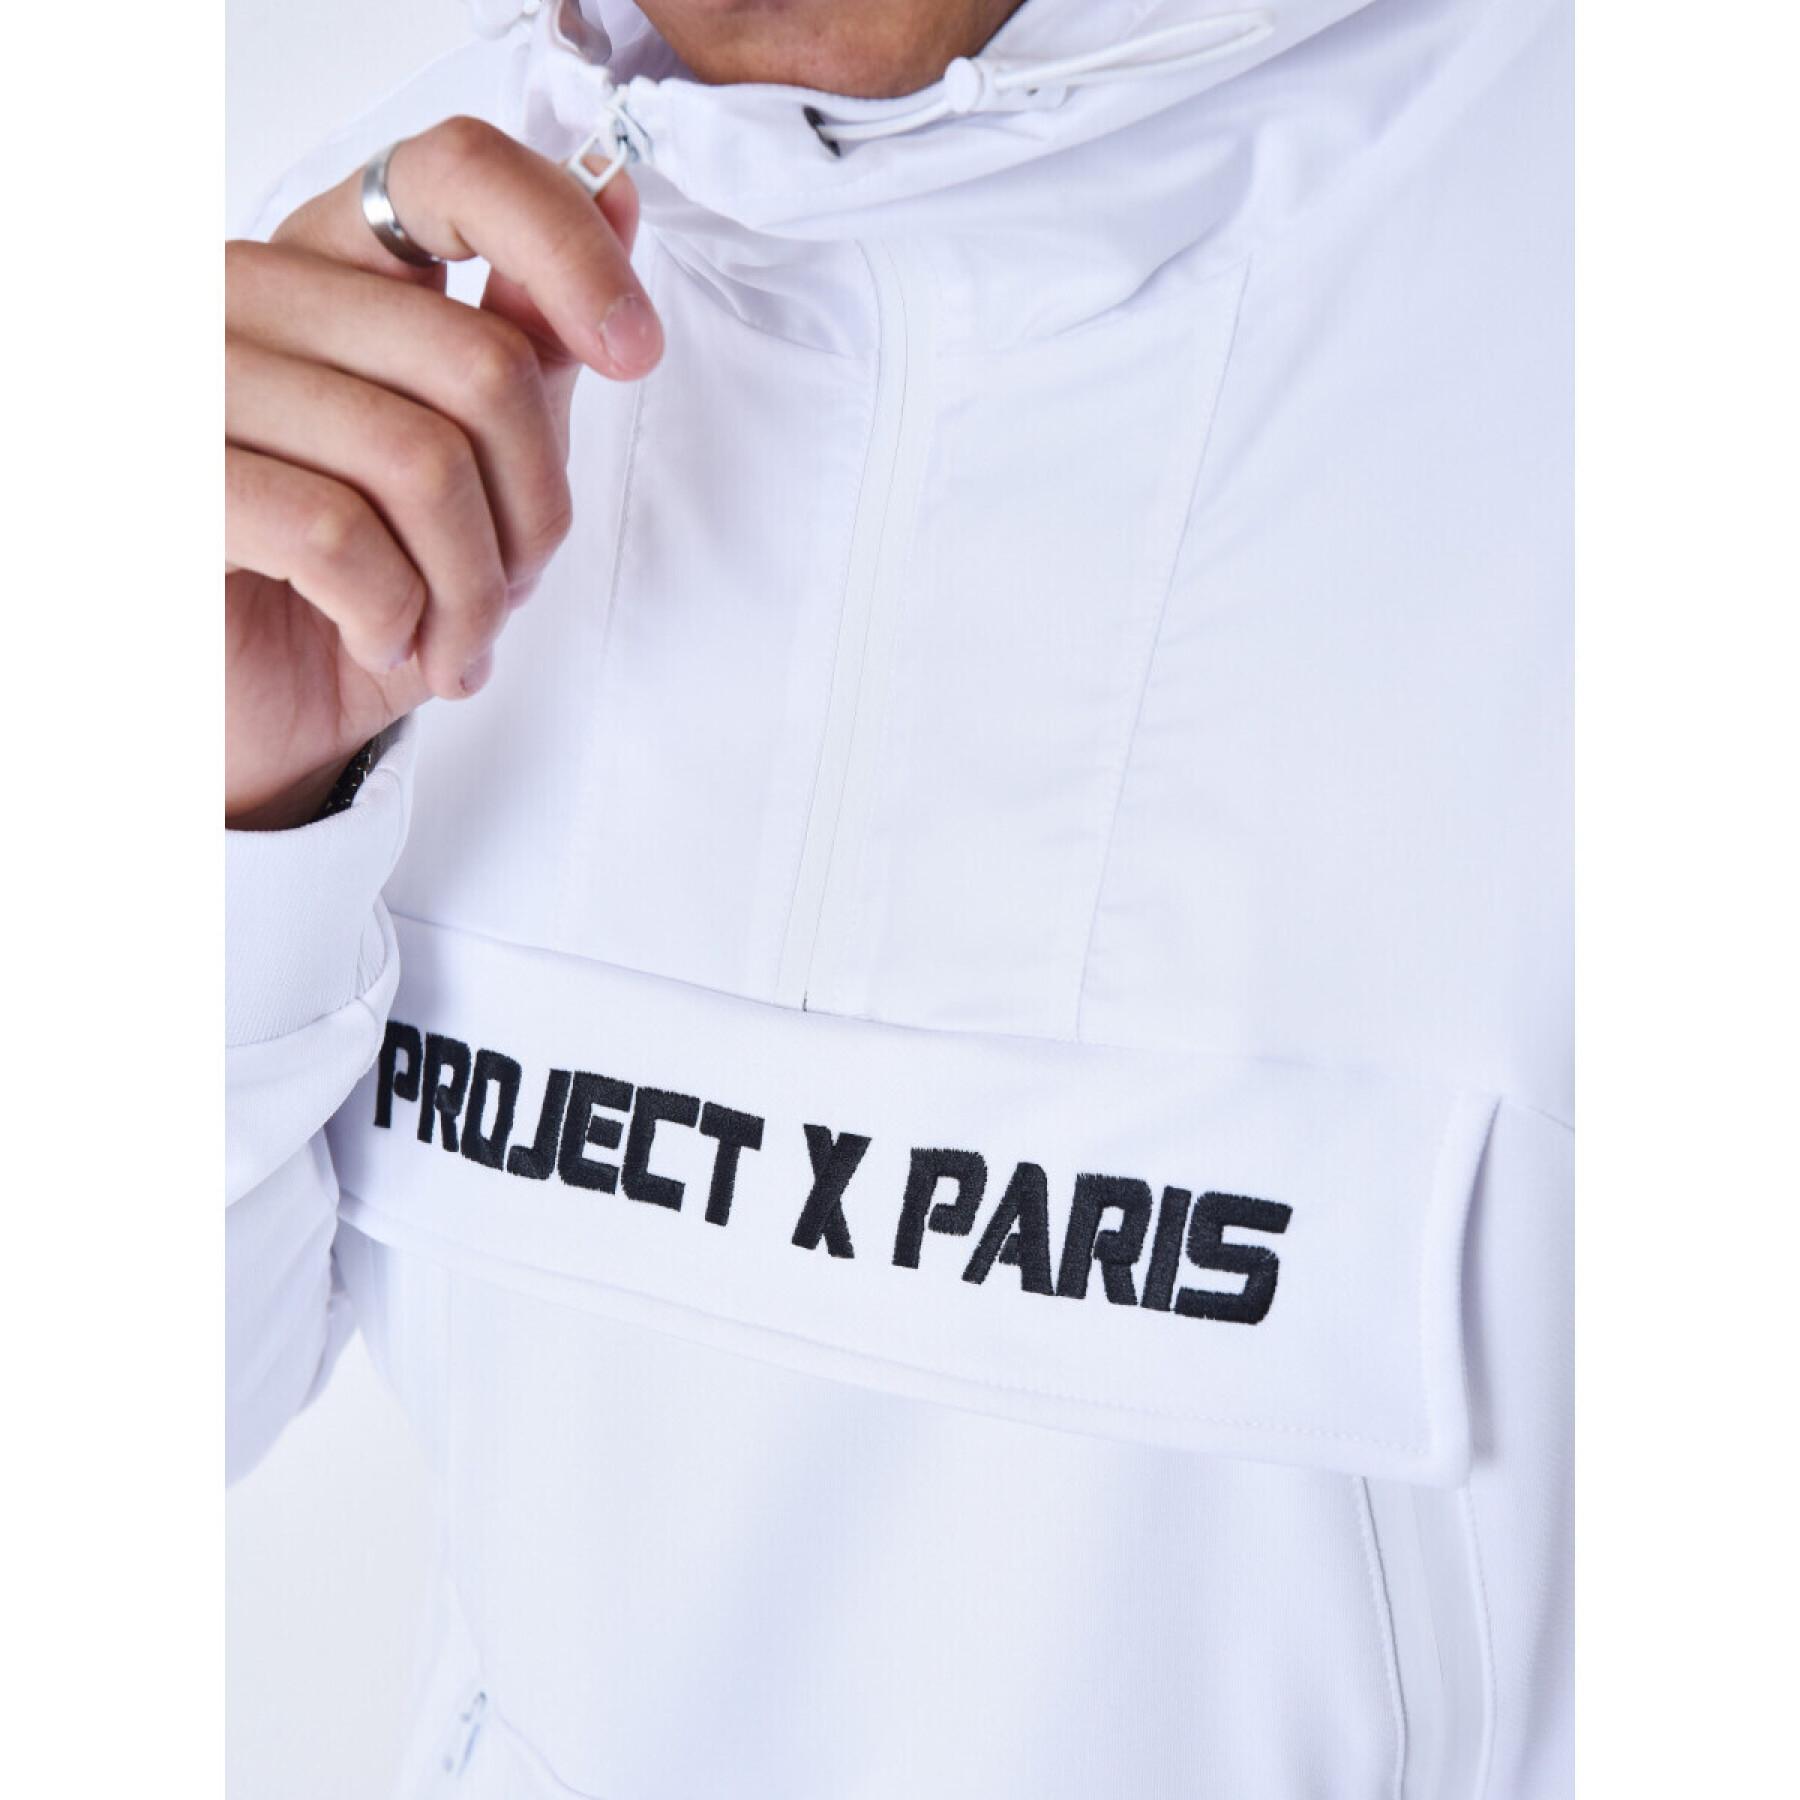 Camisola com capuz corta-vento Project X Paris